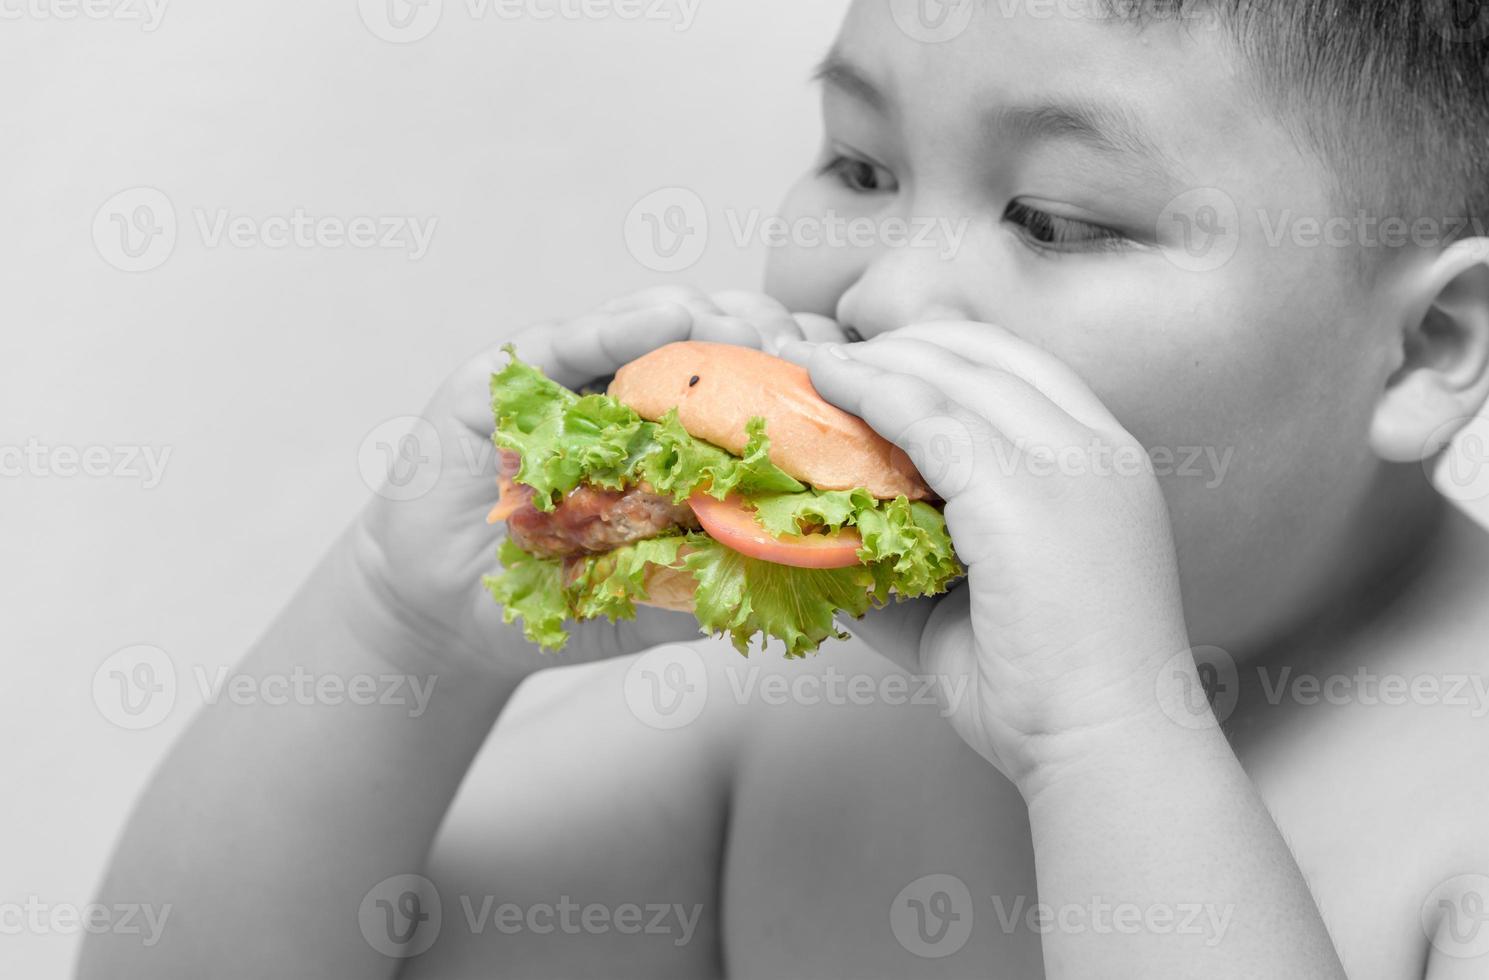 Hamburger em obeso Garoto mão Preto e branco fundo foto